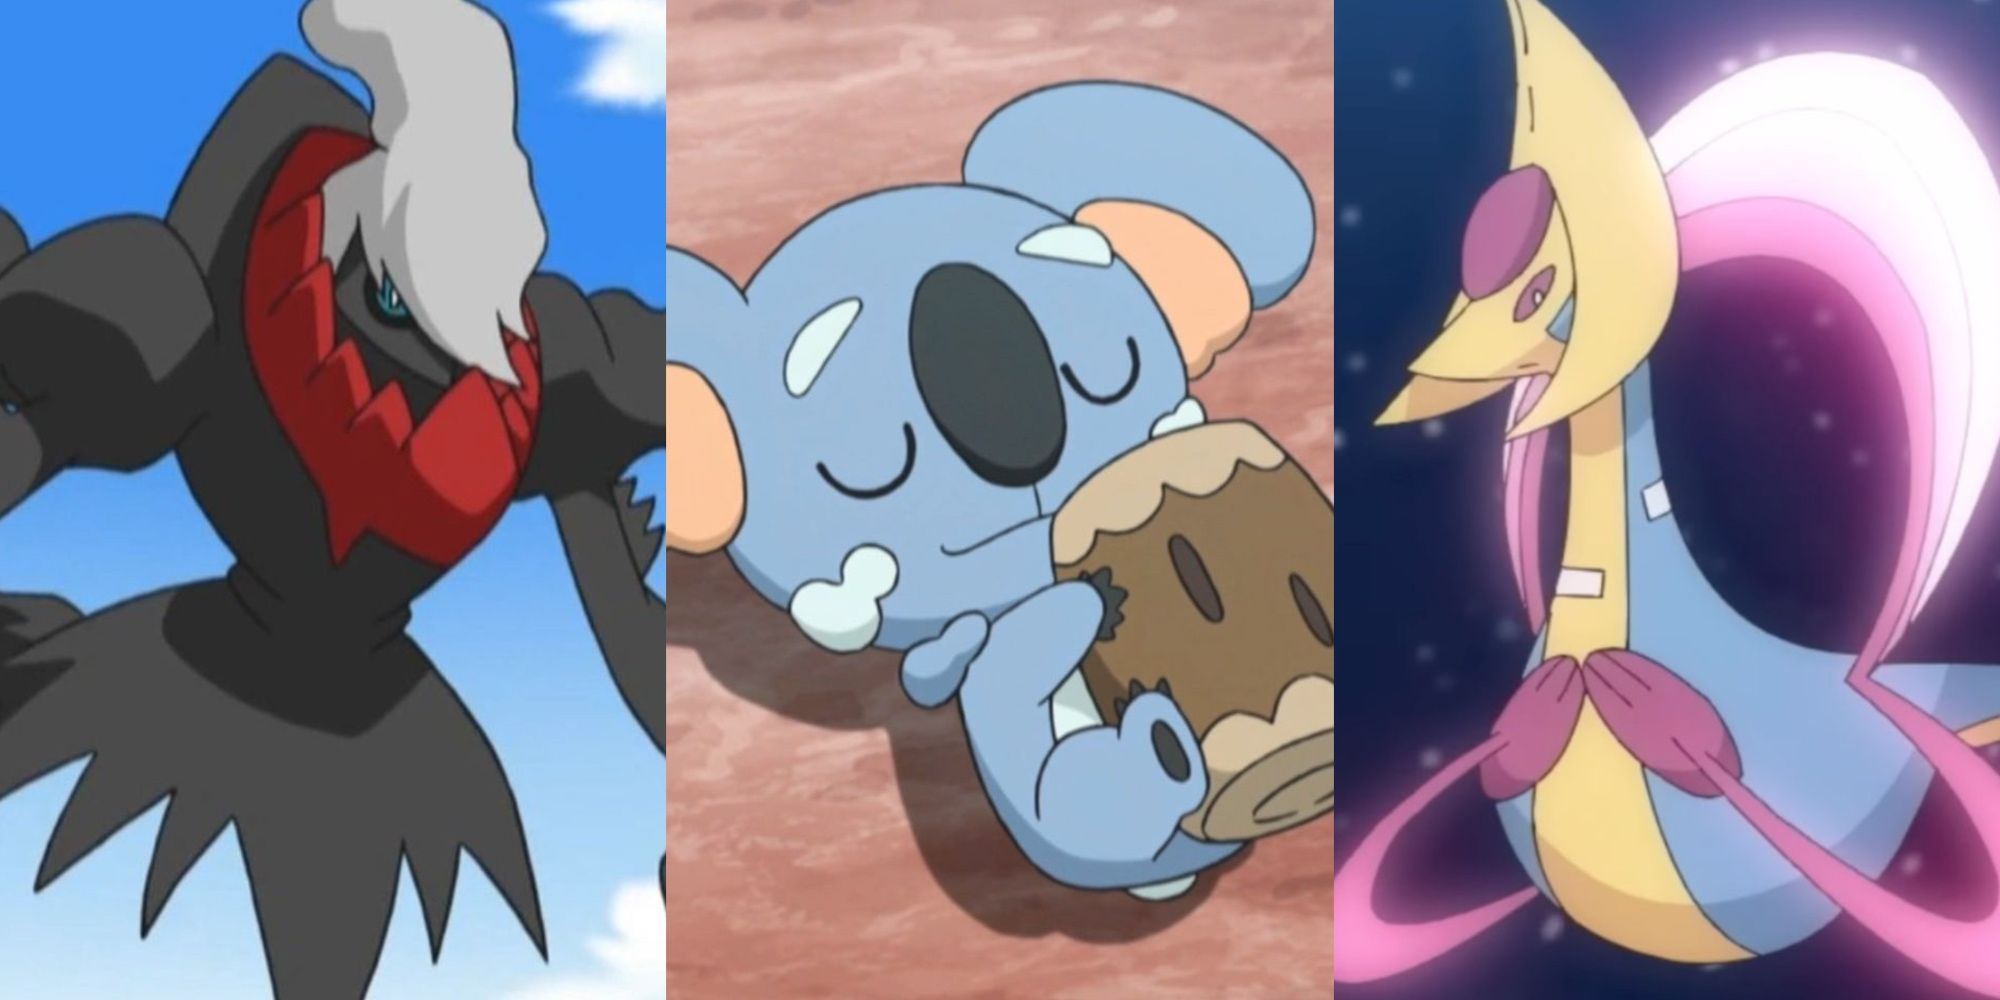 Pokémon Sleep is an annoying but effective way to wake up - Polygon